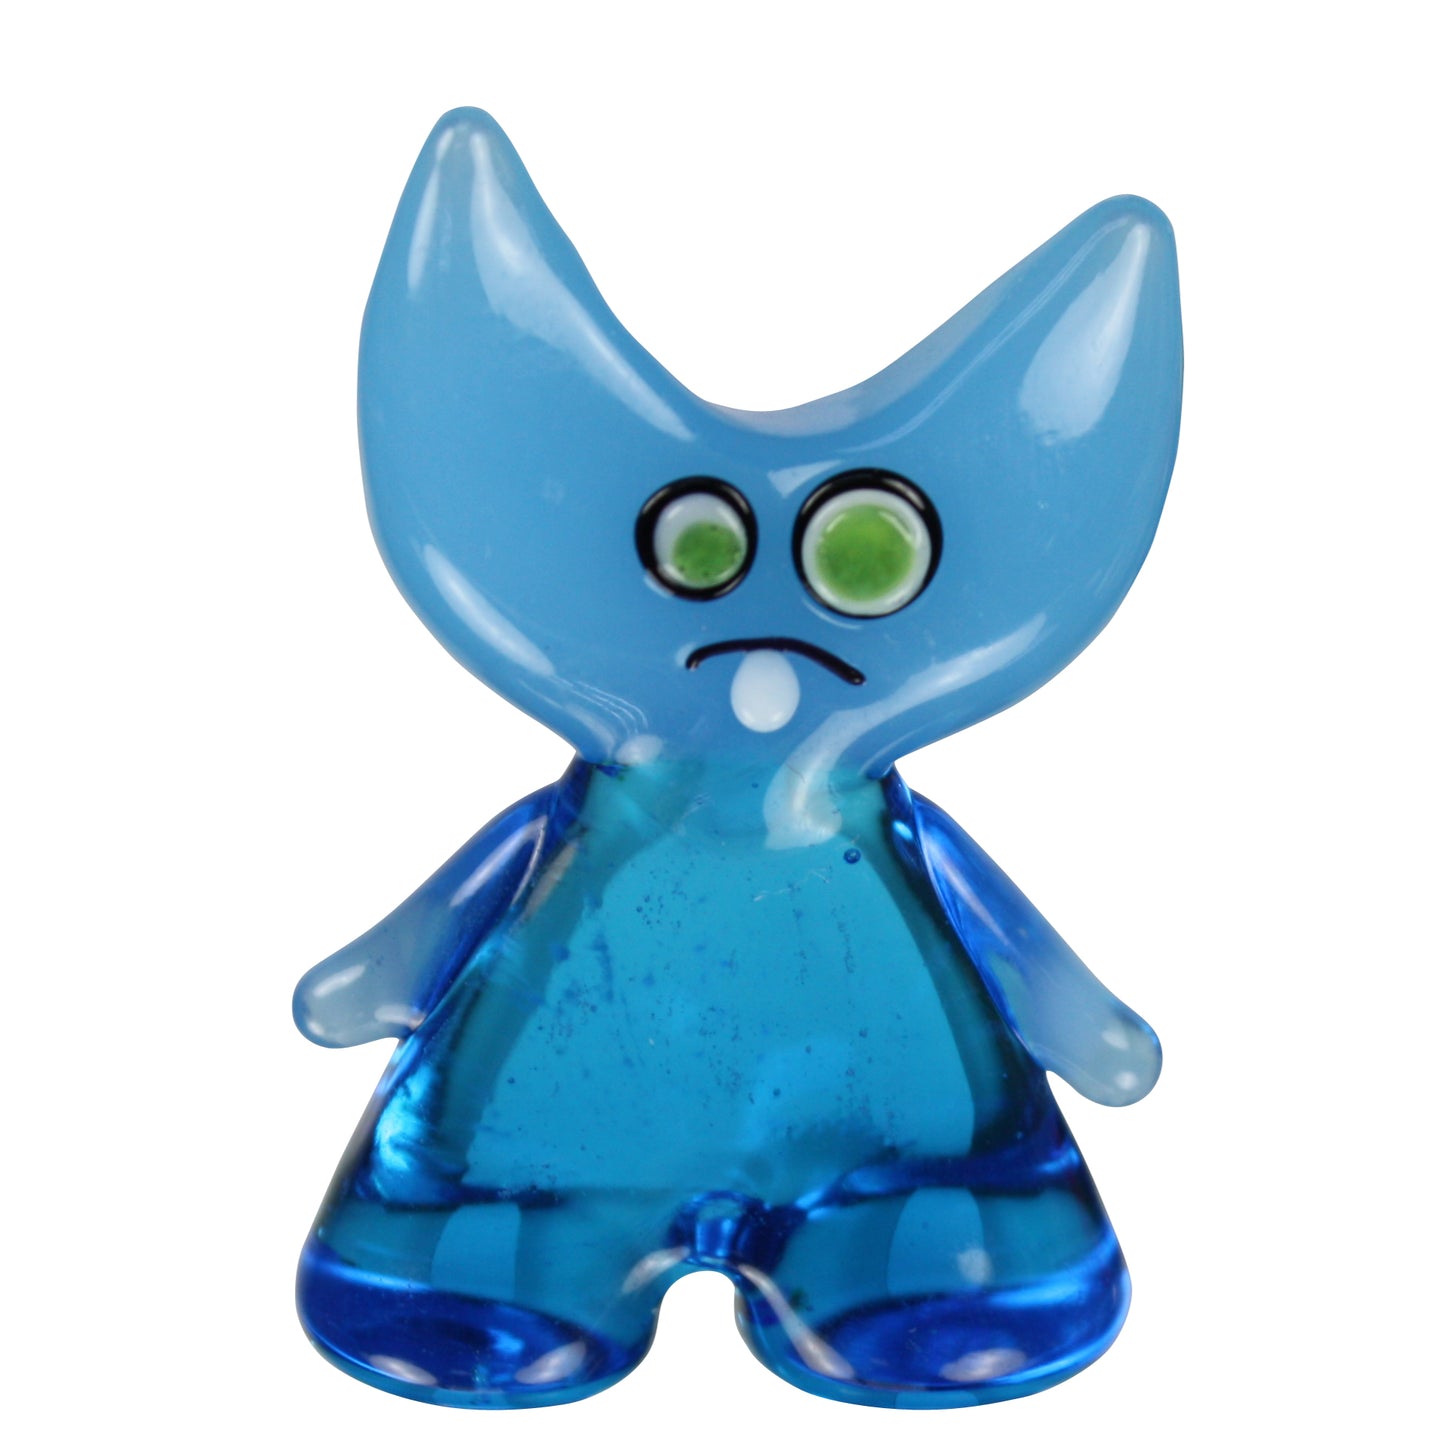 GlassWorld PeePs™ HaRLeY™ collectible miniature glass figurine Product Image